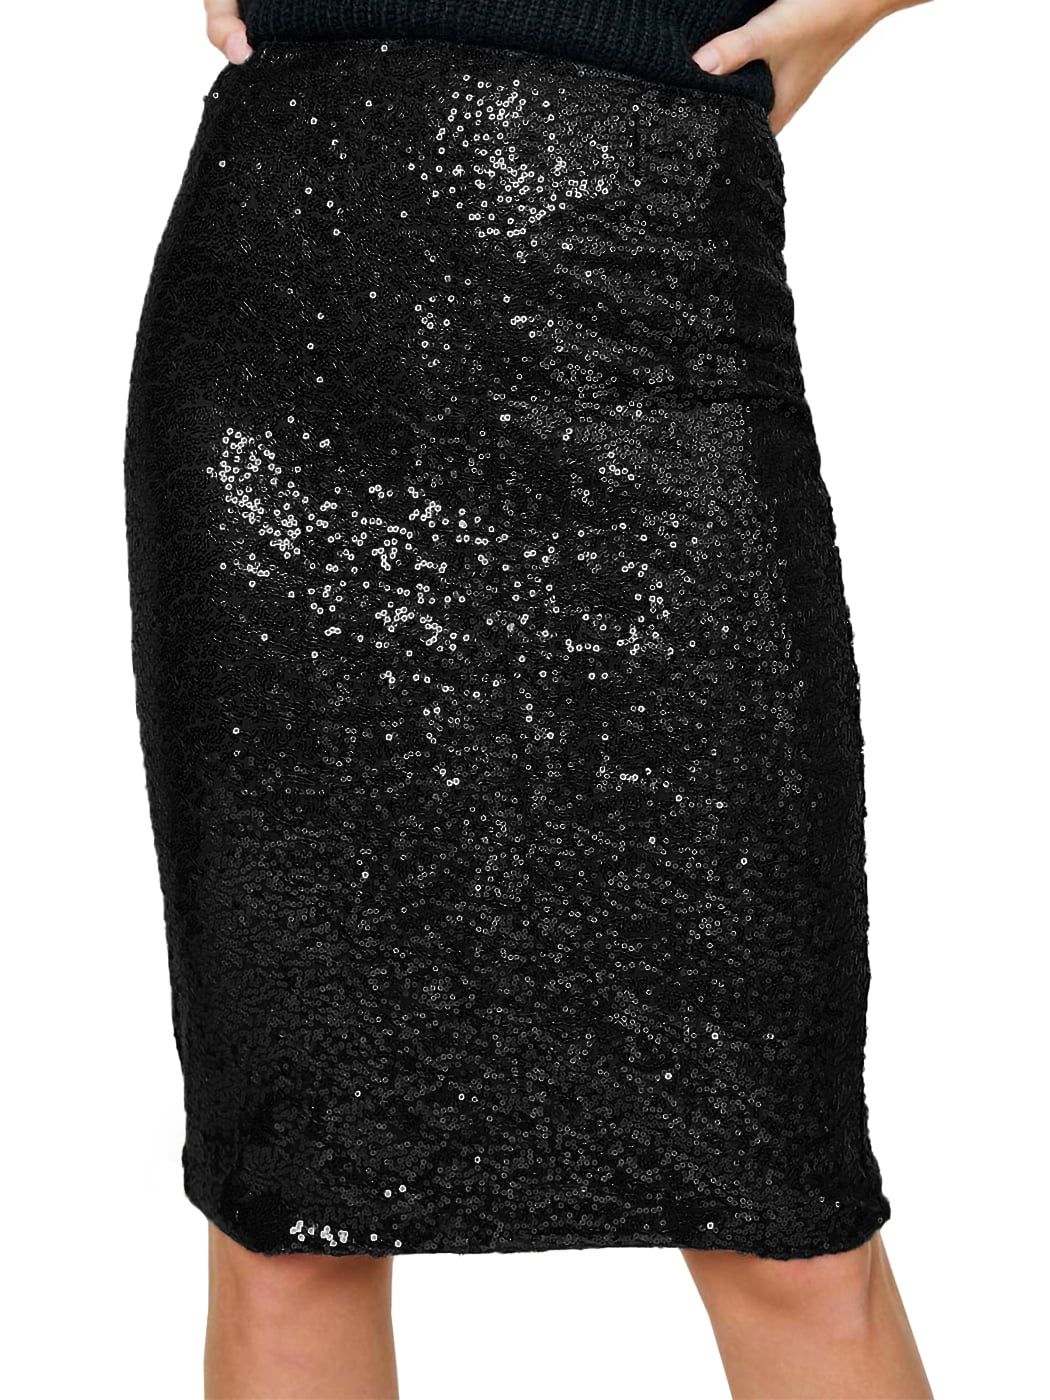 Women's High Waist Sparkly Black Sequins Midi Skirt Pencil Cocktail Party Skirt, Black, Small | Walmart (US)